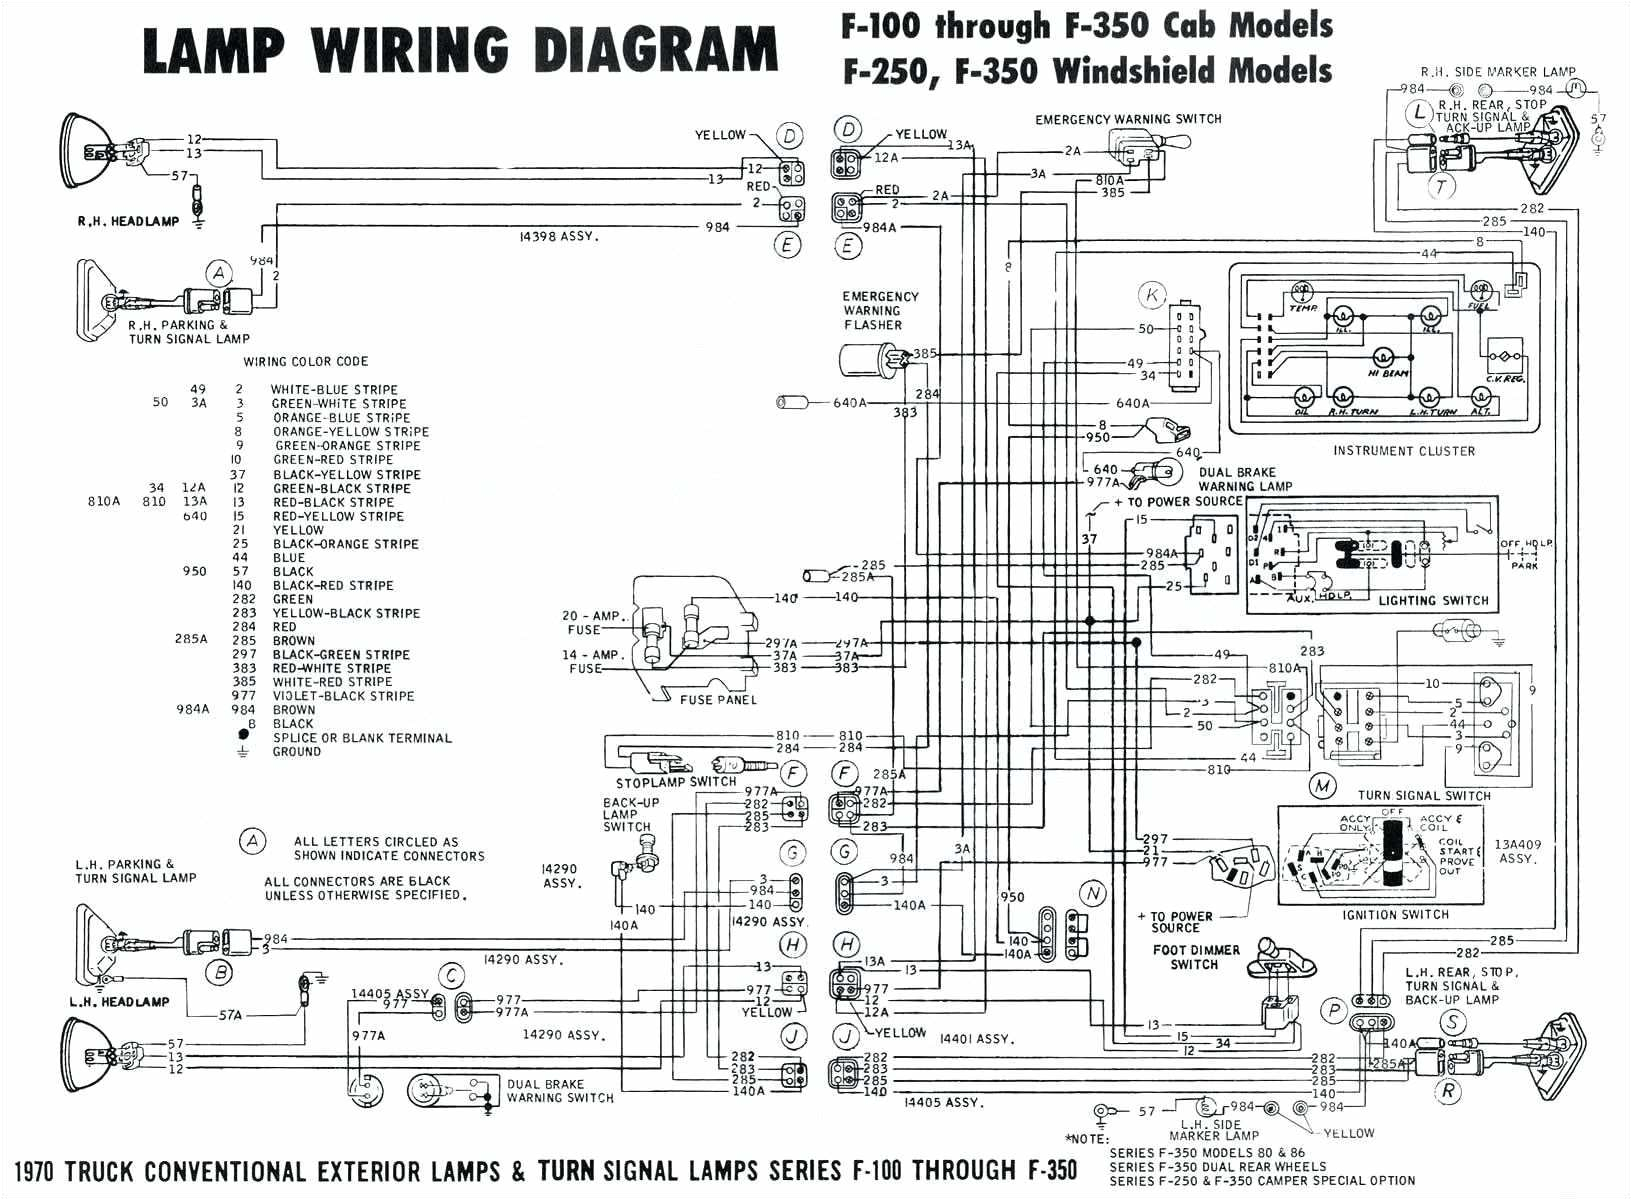 nautic star boat wiring diagram blog wiring diagram nautic star wiring diagram